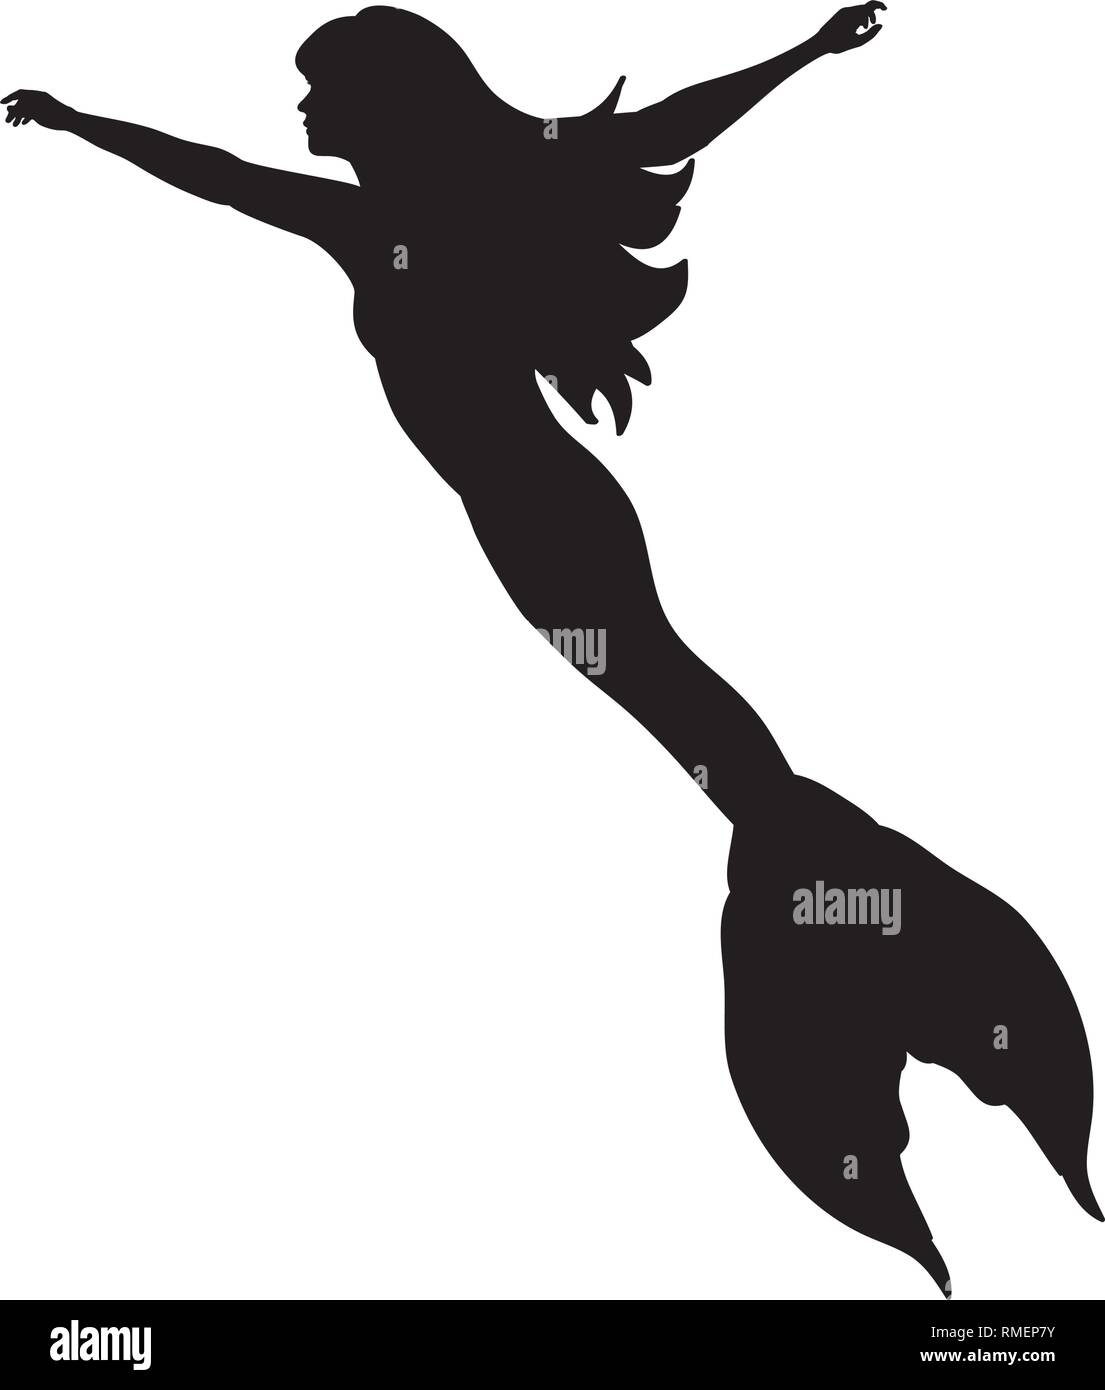 Mermaid sirene Nymphe Silhouette der antiken Mythologie fantasy  Stock-Vektorgrafik - Alamy